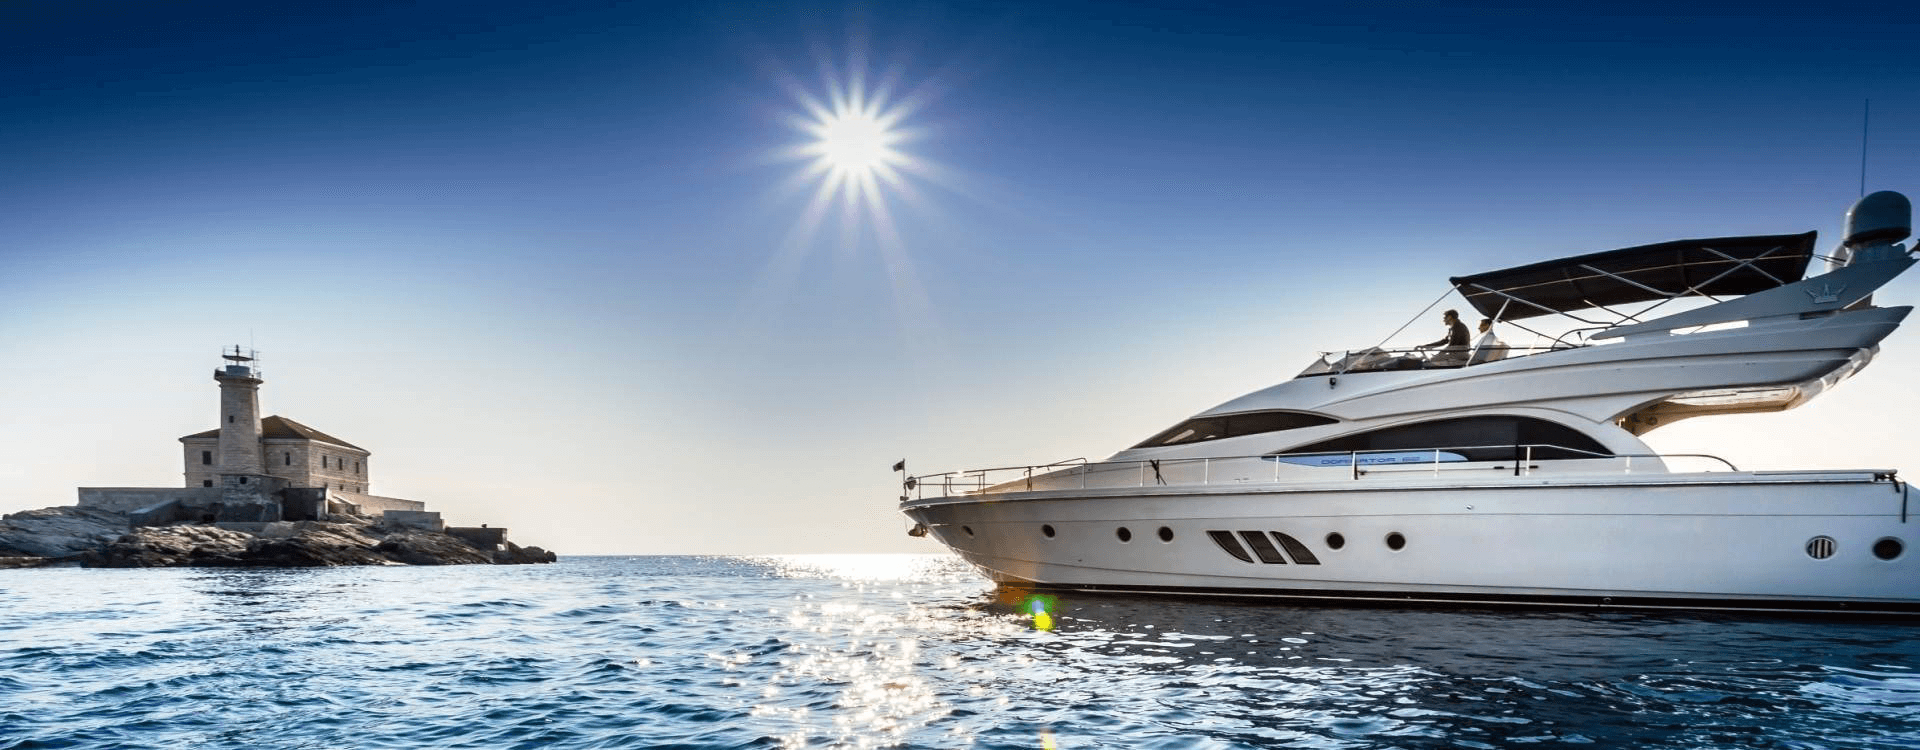 yacht rental croatia cost